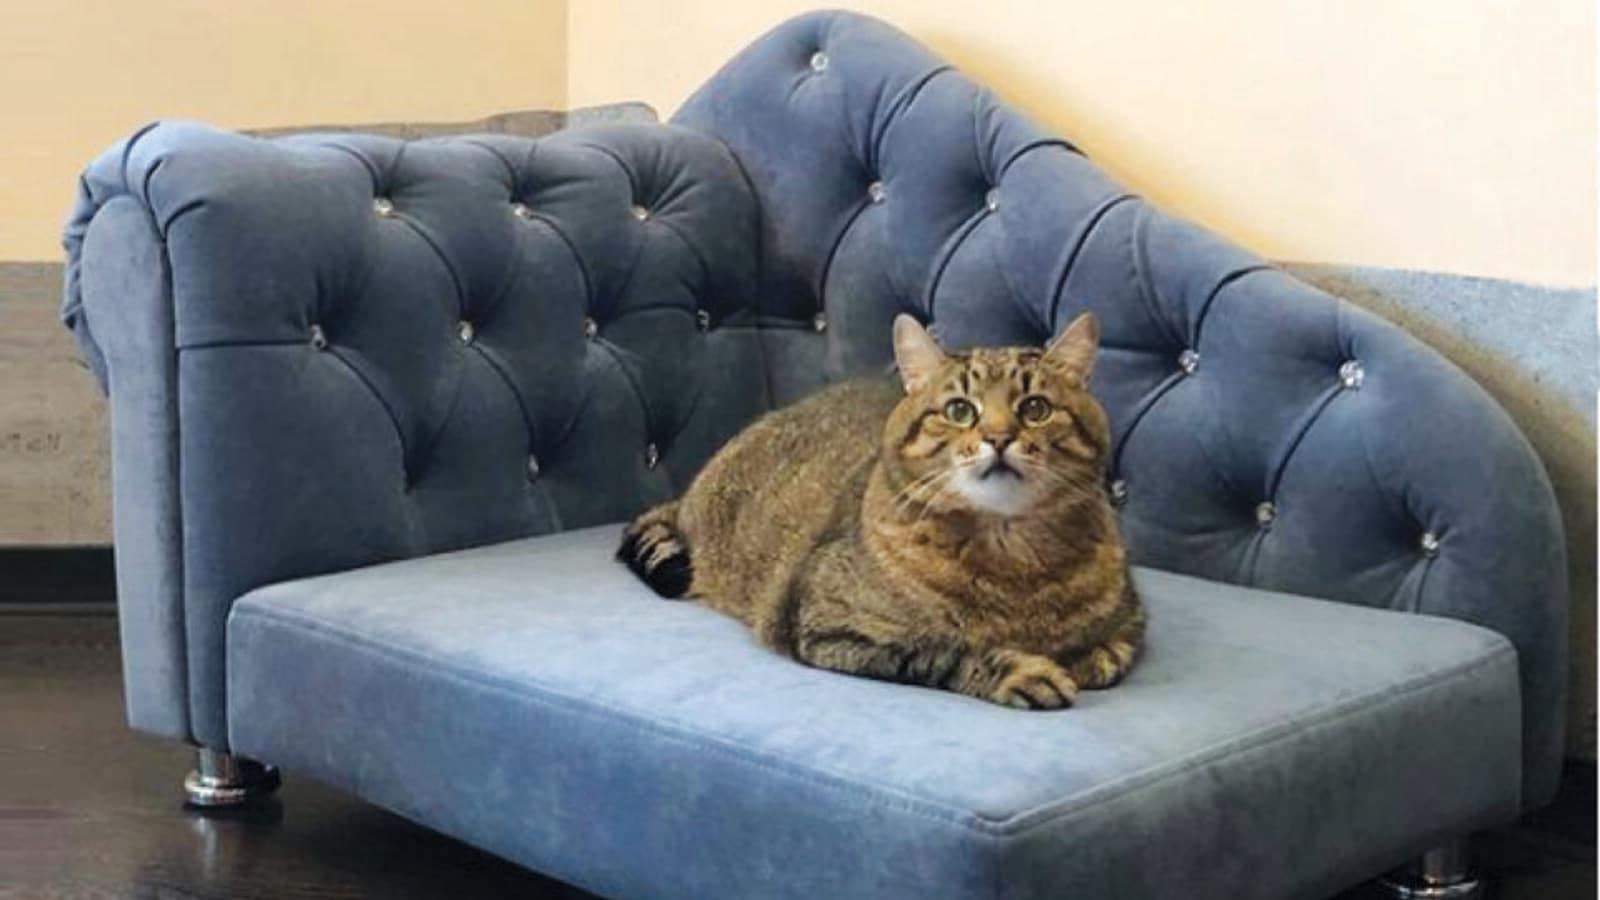 Stepan the Internet-Famous Cat Escapes Ukraine, Finds Safety - CNET